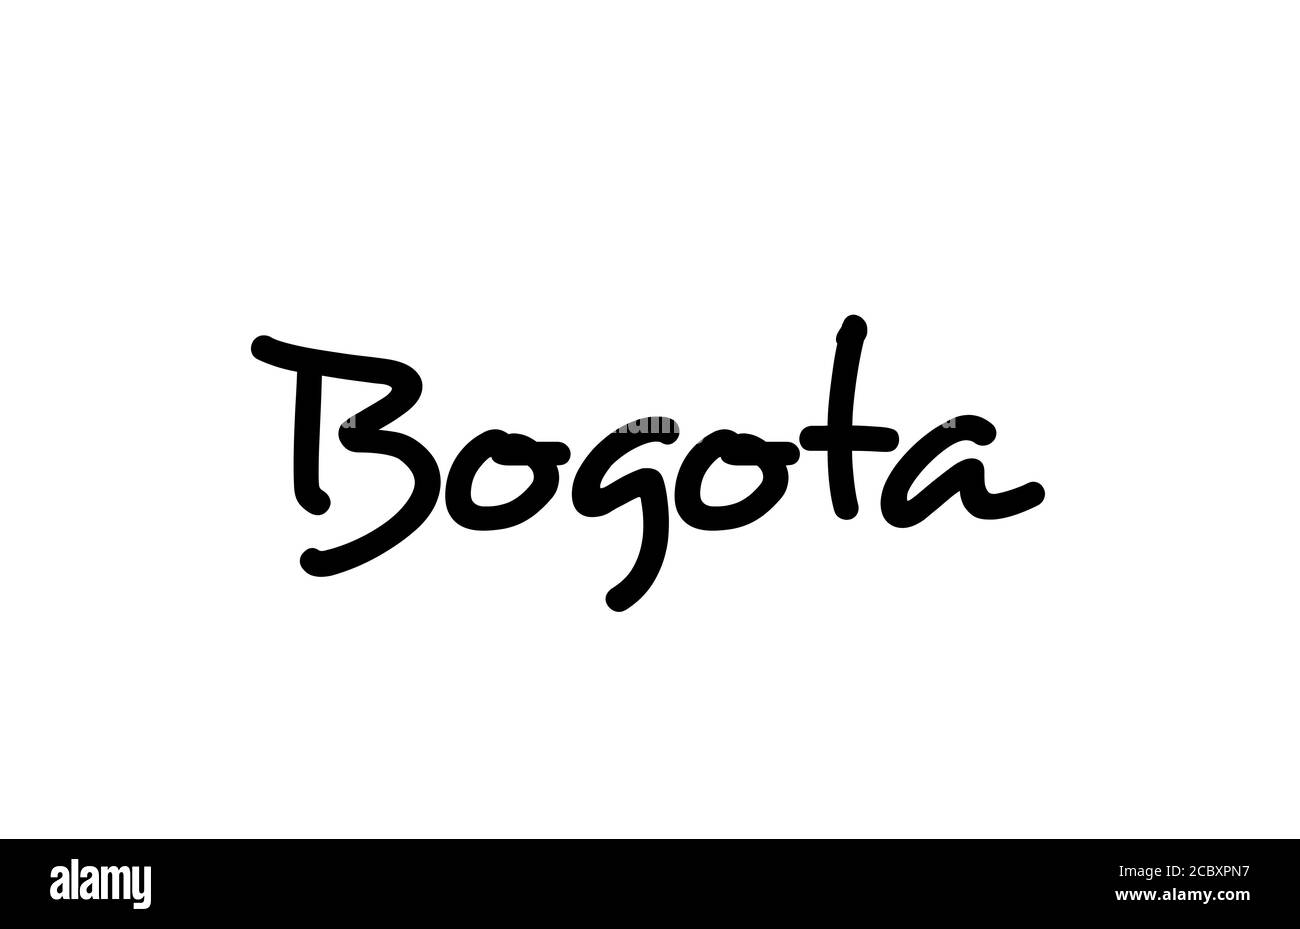 Bogota city handwritten text word hand lettering. Calligraphy text. Typography in black color Stock Vector